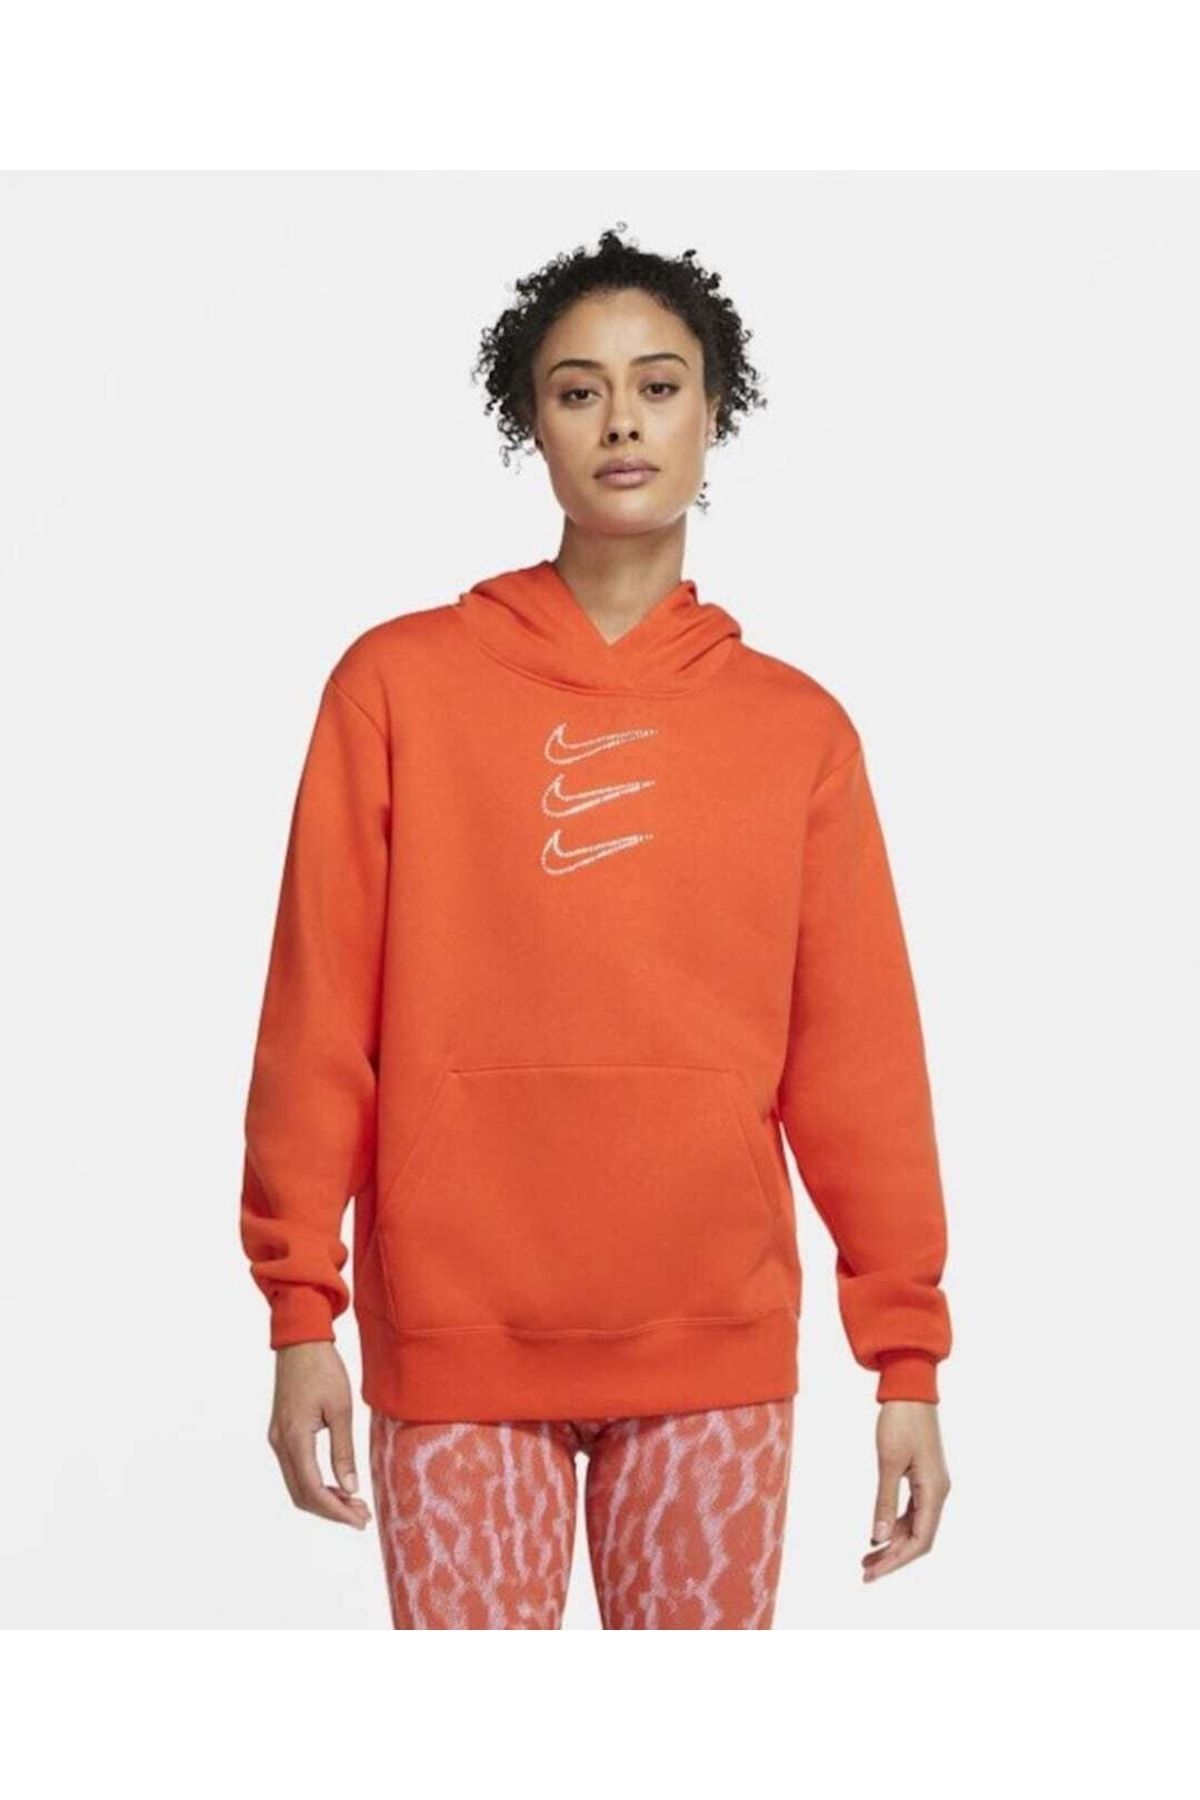 Nike Sportswear Women's Hoodie Turuncu Kadın Sweatshirt Cu6621-891